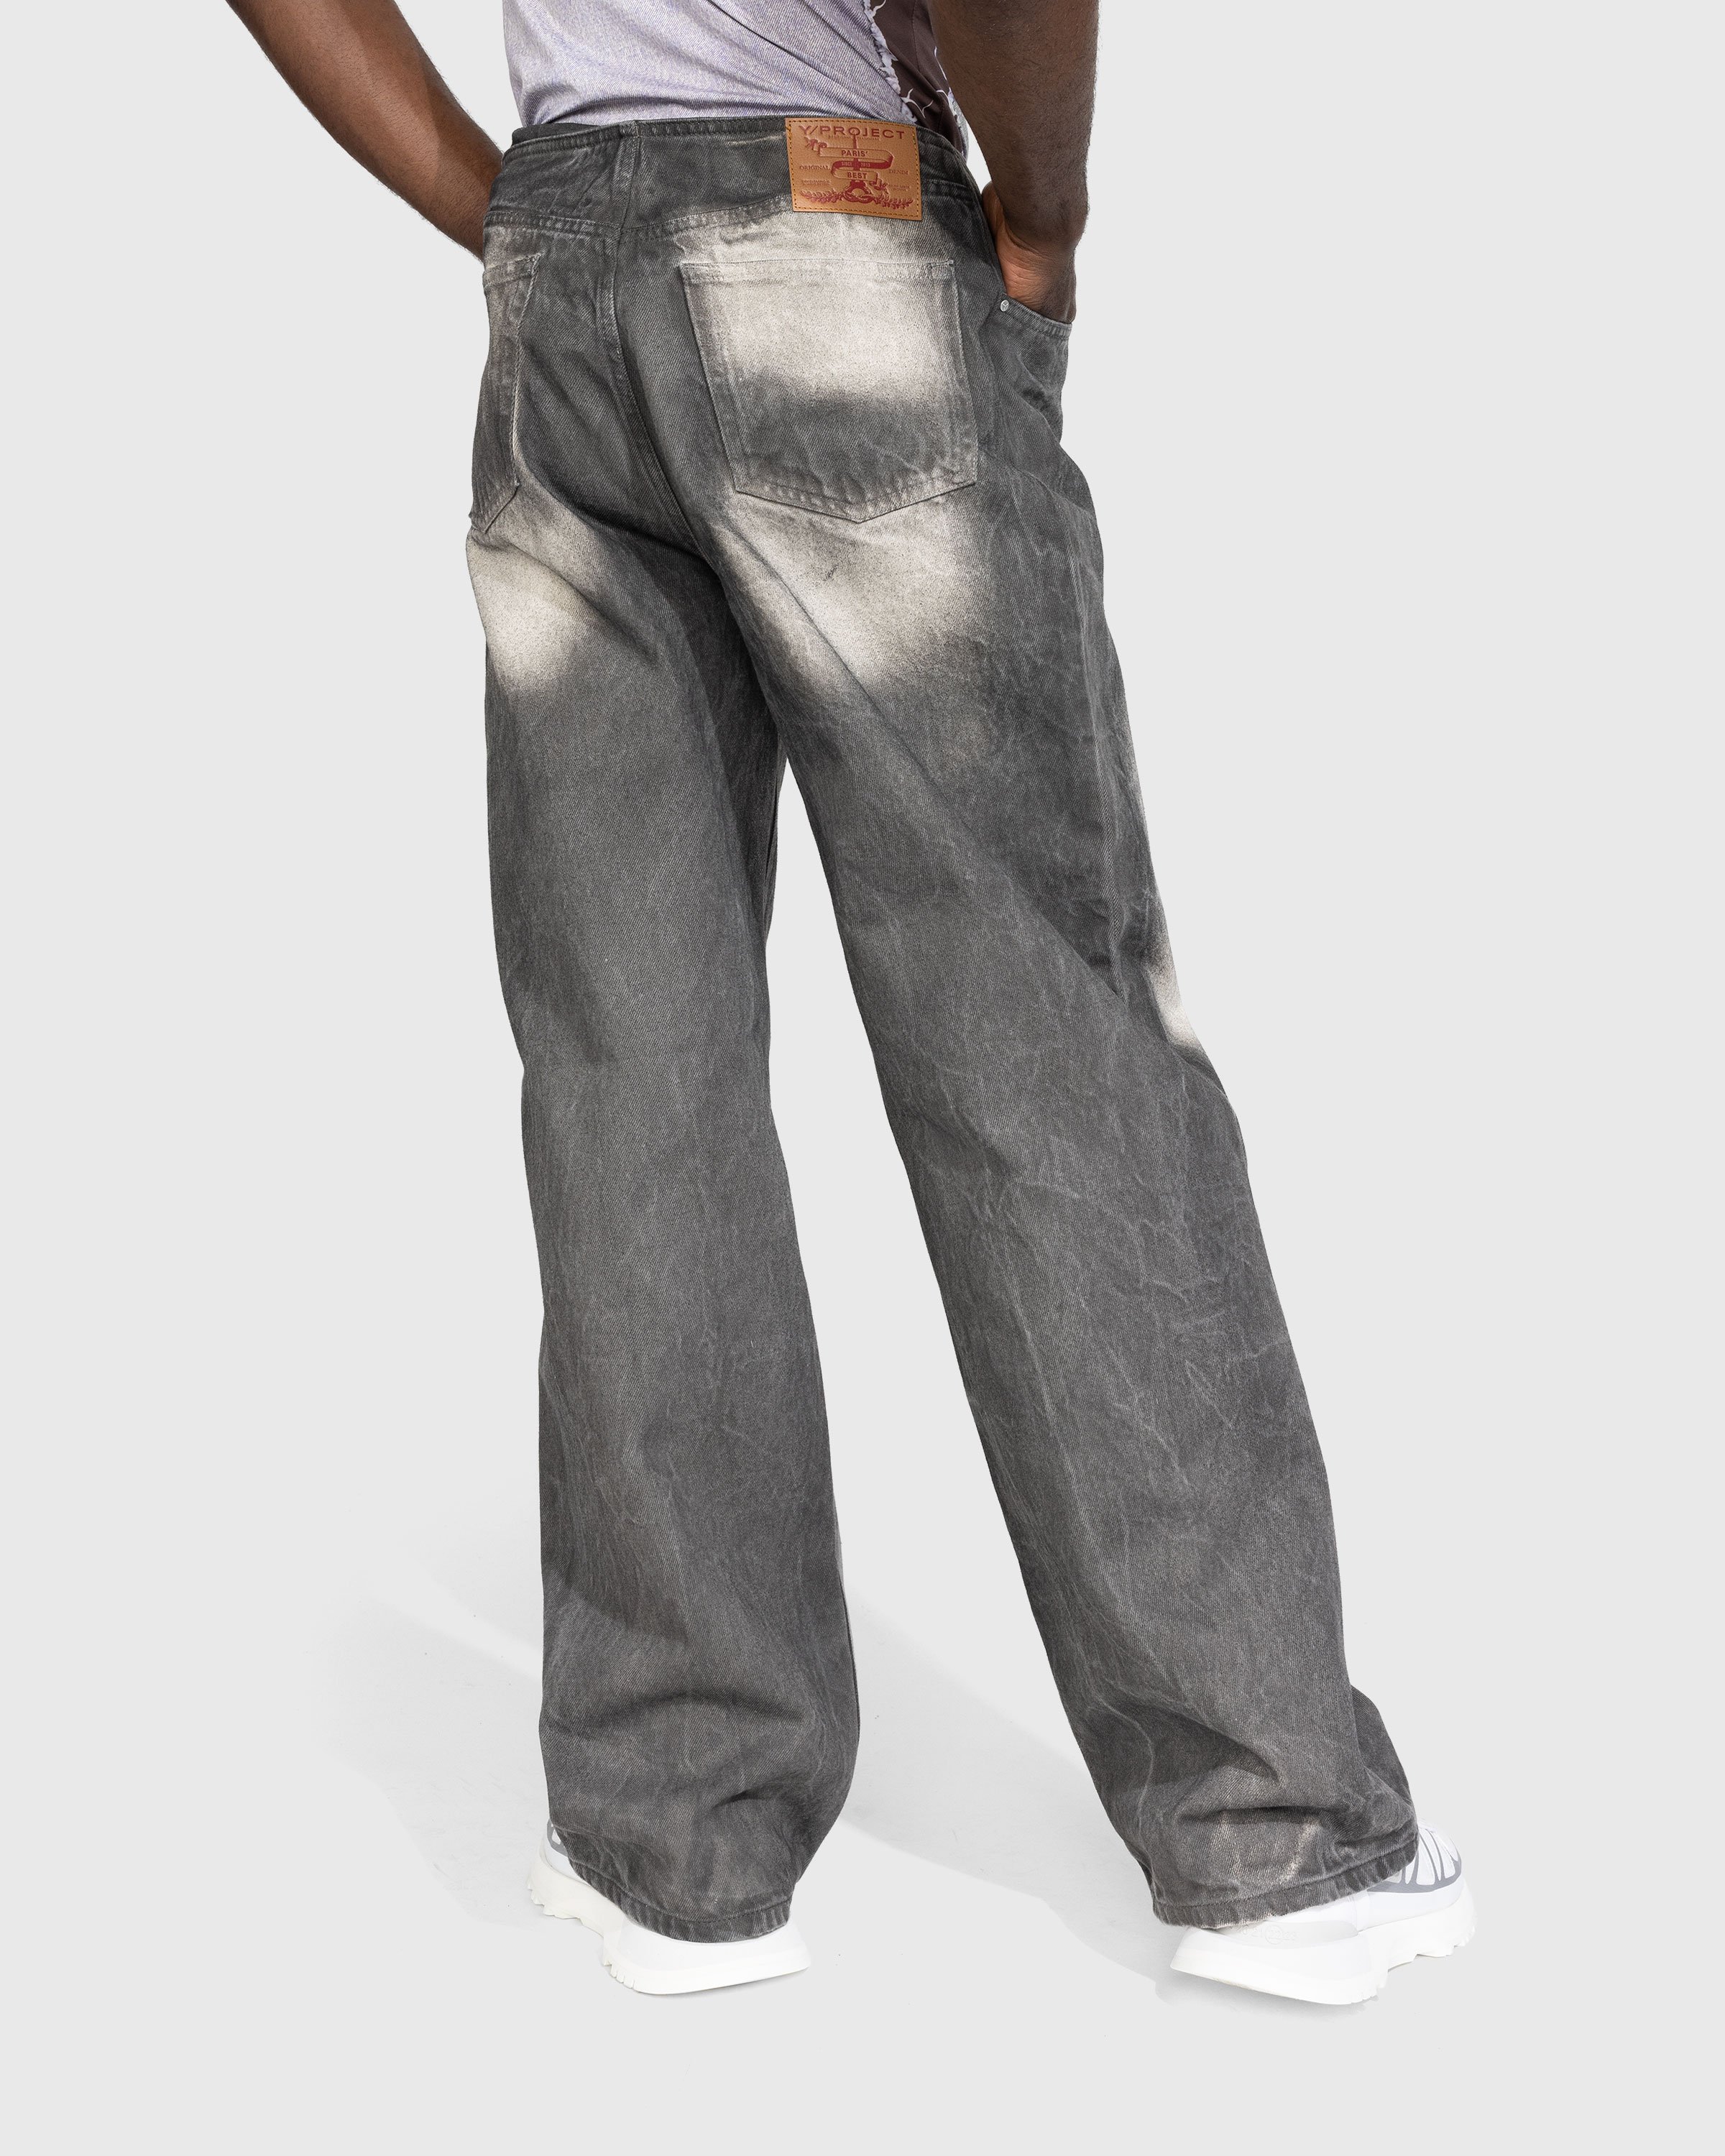 Y/Project - Y Belt Arc Jeans Faded Black - Clothing - Grey - Image 3